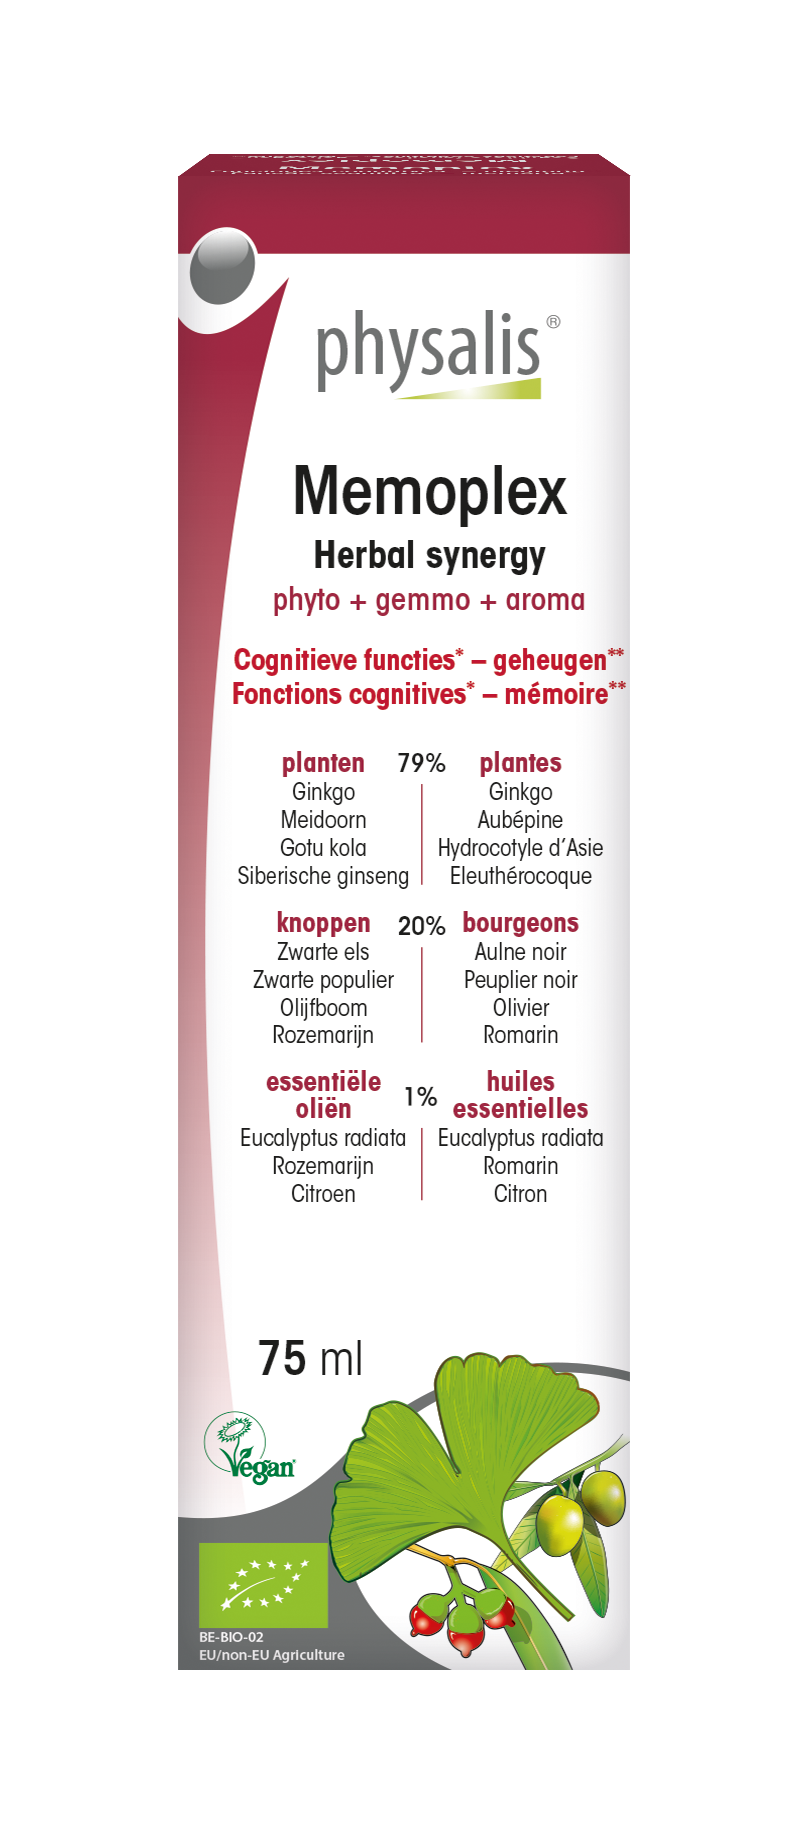 Memoplex Herbal synergy